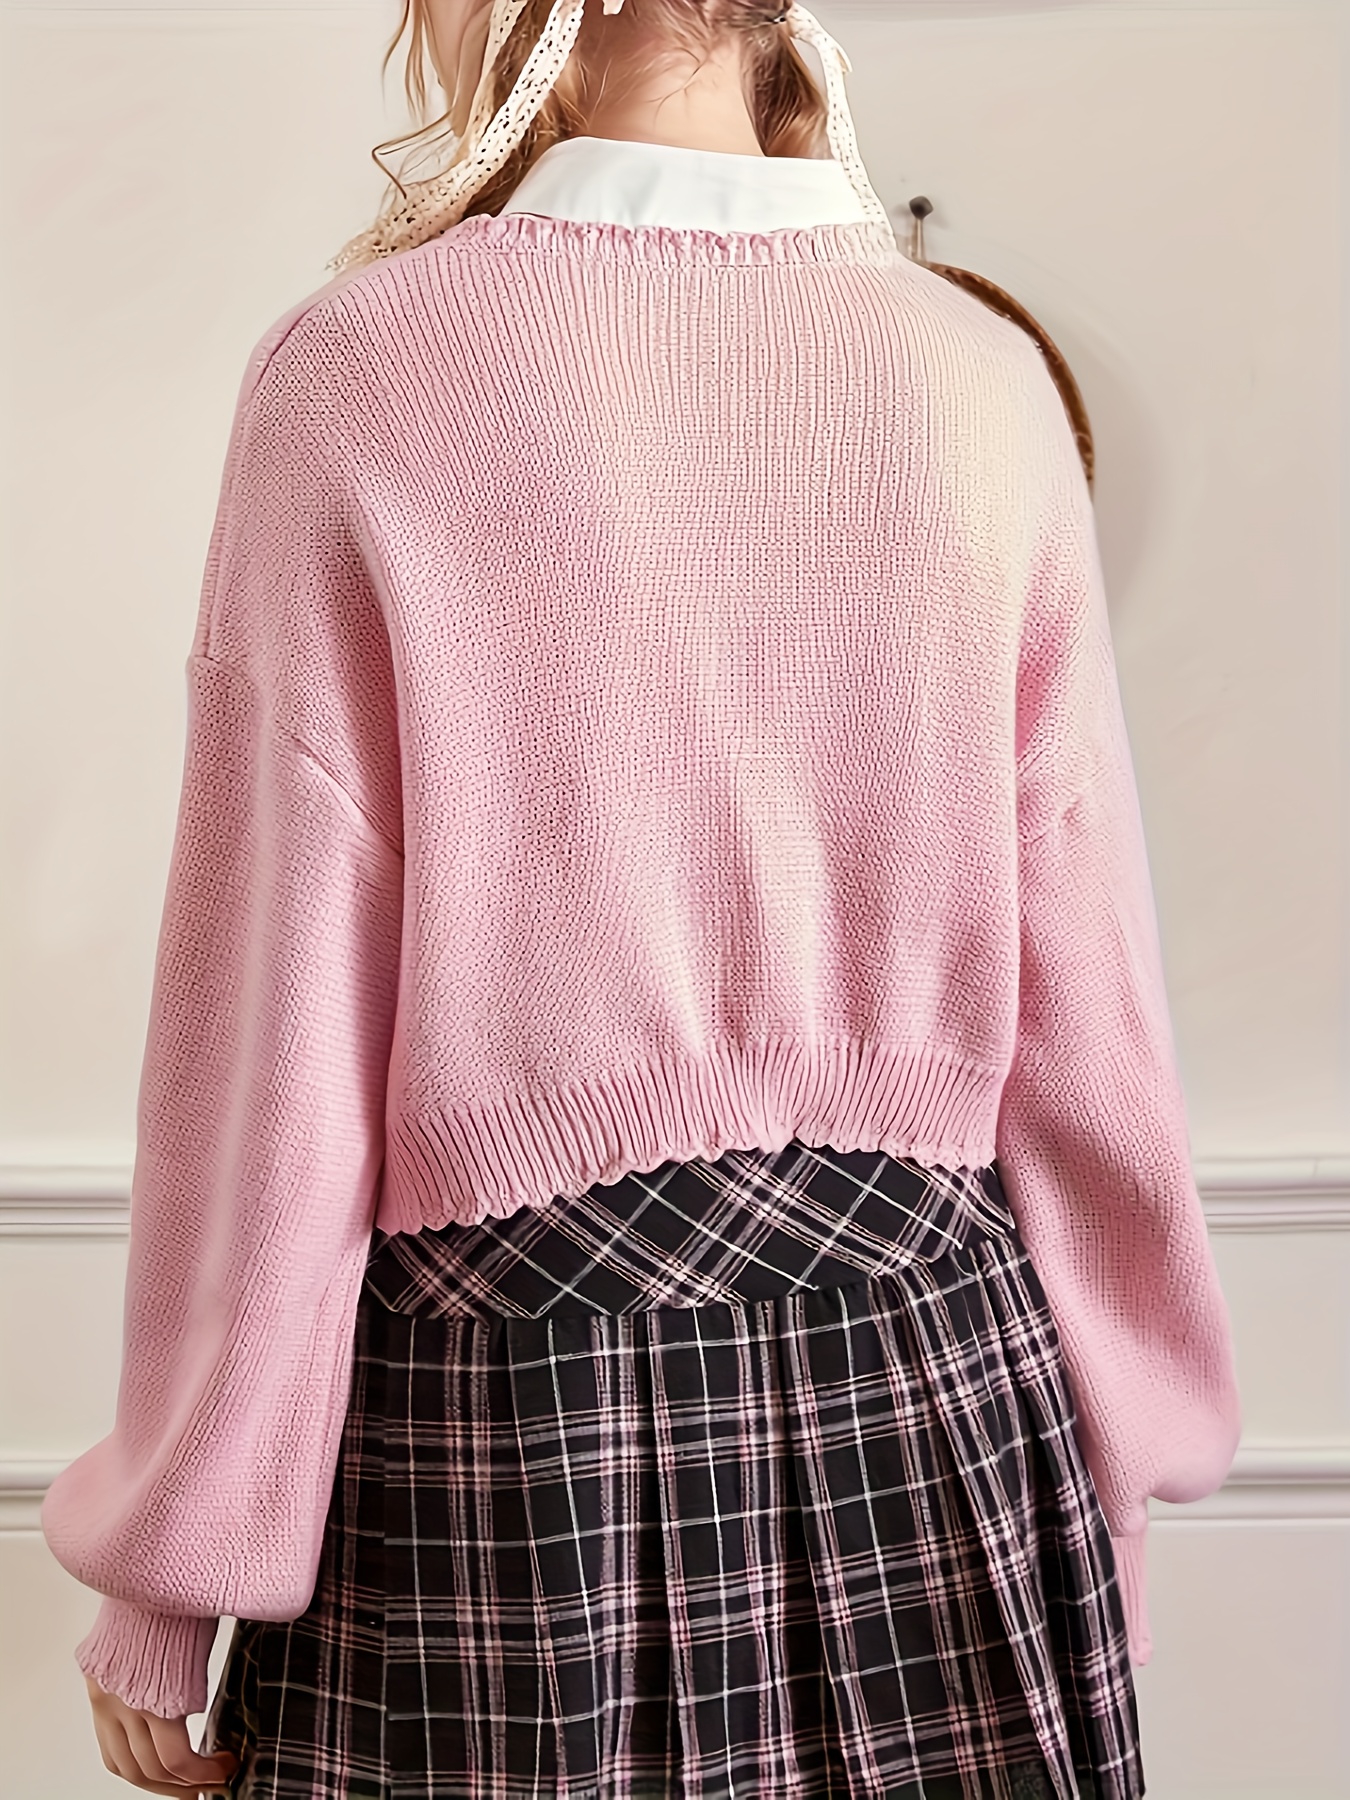 Women's Long Sleeve Cute Cardigan Sweater Y2k Top Cropped Knit Floral  Pattern V Neck Button Down Outwear